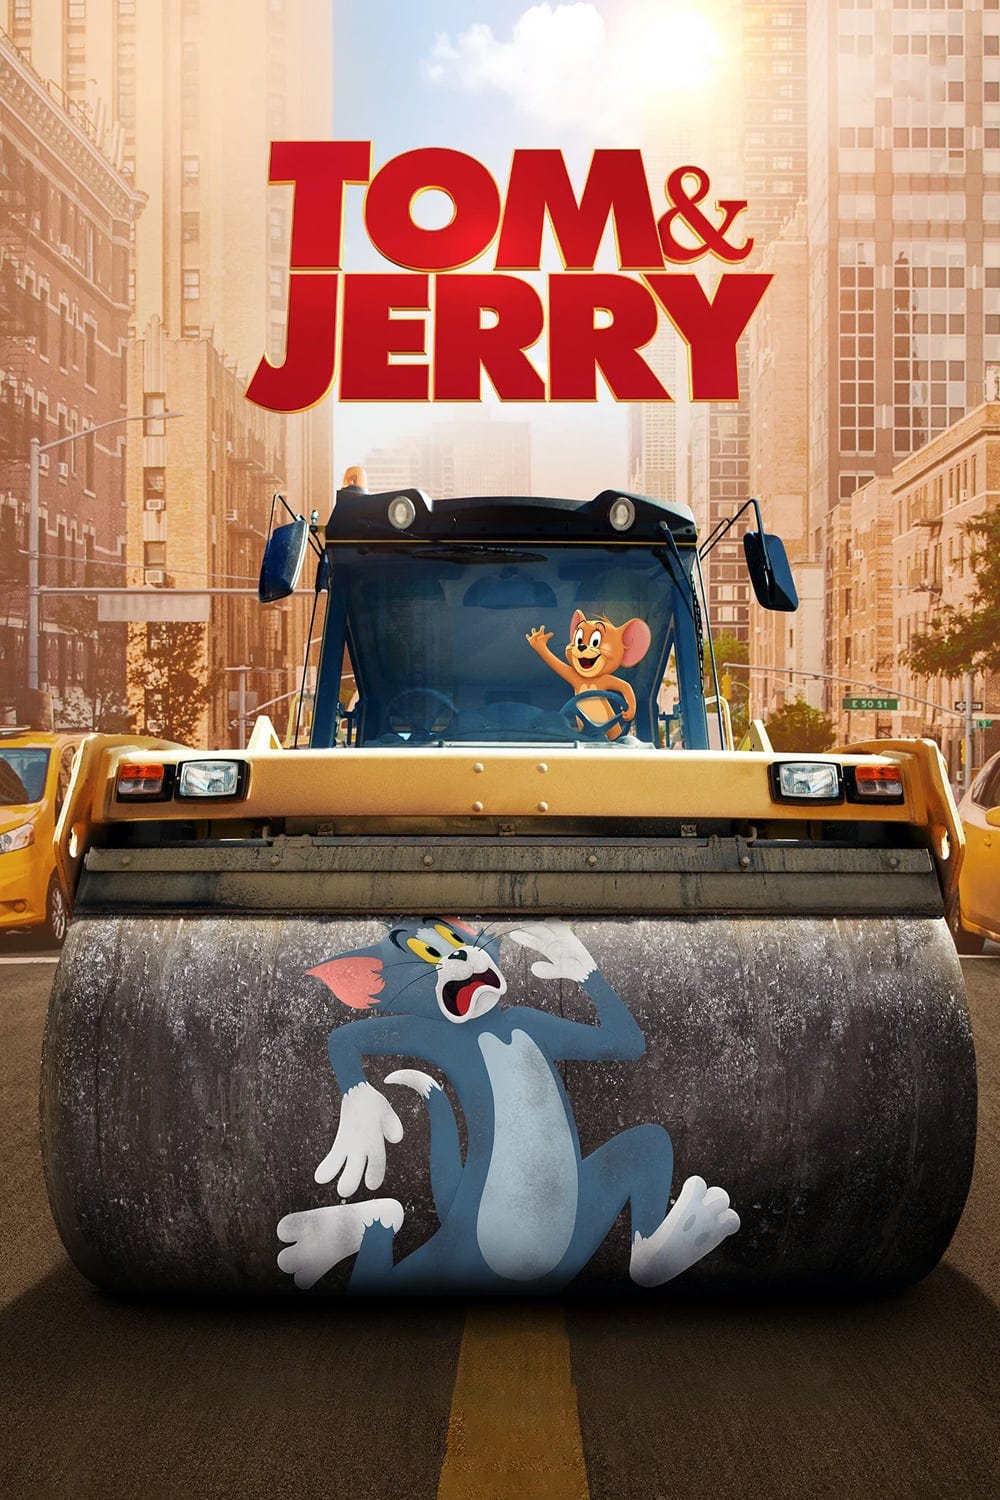 [MINI Super-HQ] Tom and Jerry (2021) ทอม แอนด์ เจอร์รี่ [1080p] [พากย์ไทย 2.0 + เสียงอังกฤษ 5.1] [บรรยายไทย + อังกฤษ] [เสียงไทยมาสเตอร์ + ซับไทย] [PANDAFILE]